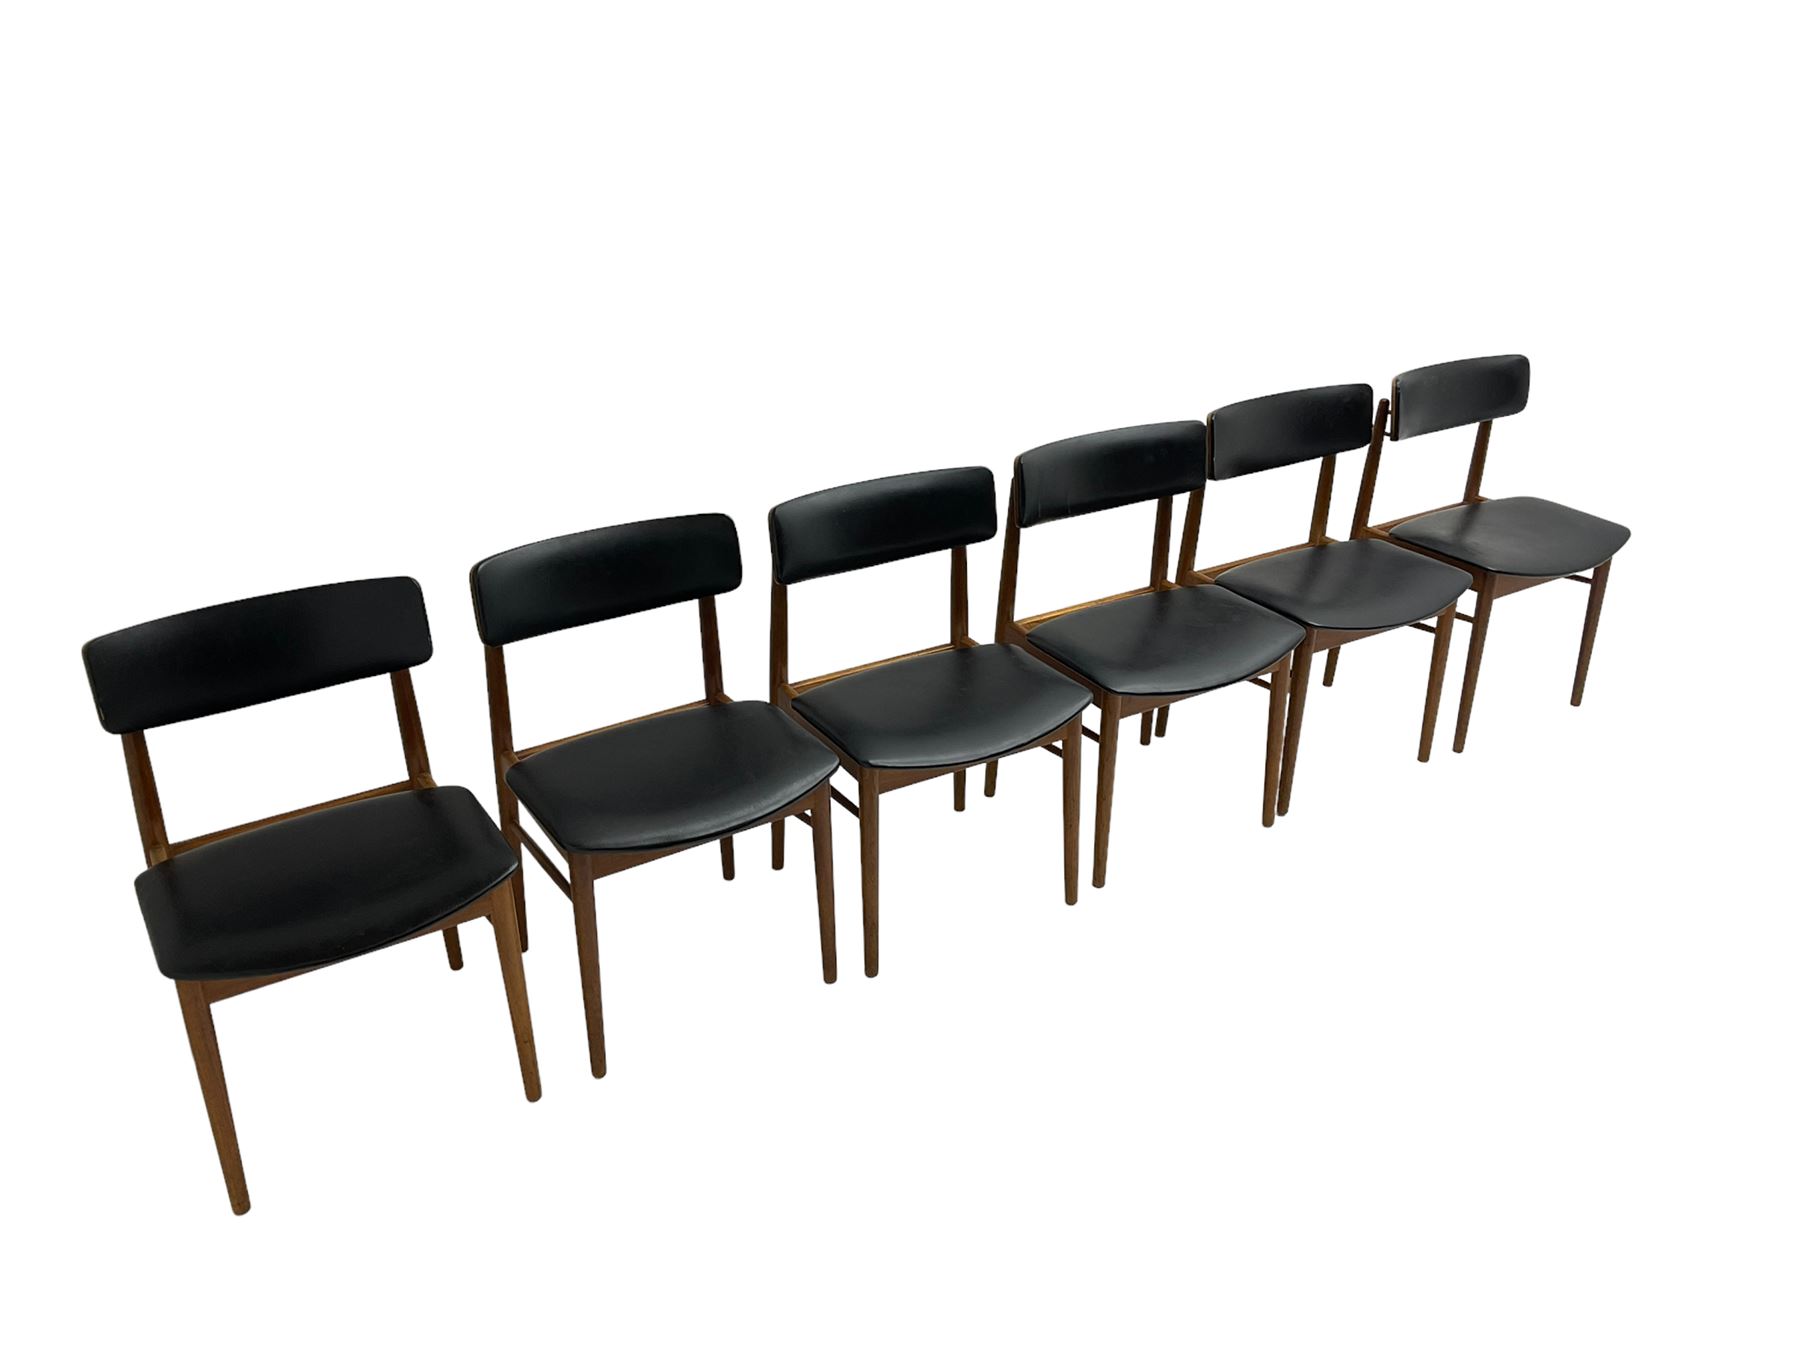 S Chrobat for Sax Mobler - set six mid-20th century Danish teak dining chairs - Image 5 of 6